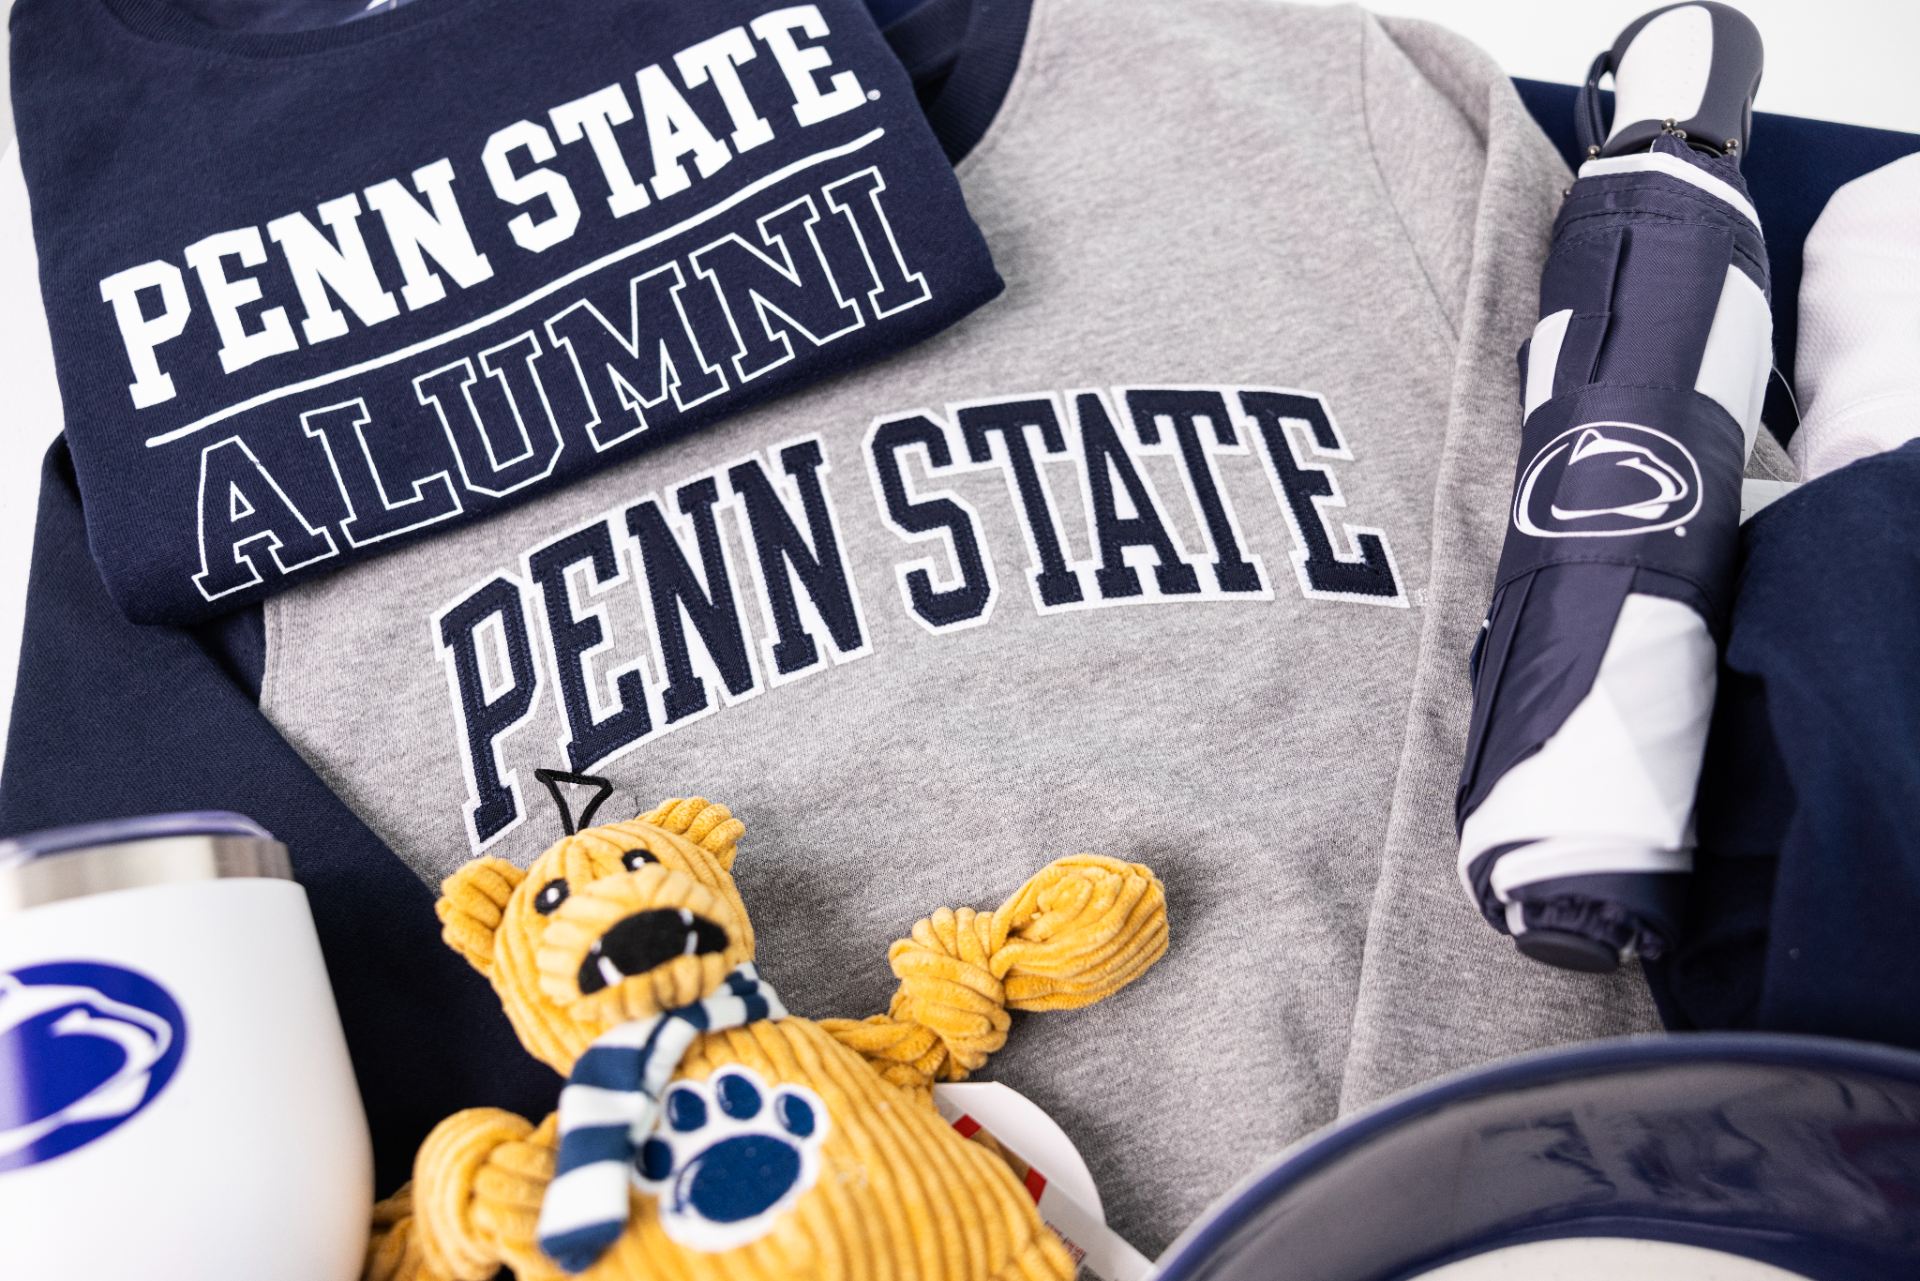 Penn State Alumni shirt, Pen State sweatshirt, Penn State cups, and a Nittany Lion stuffed animal